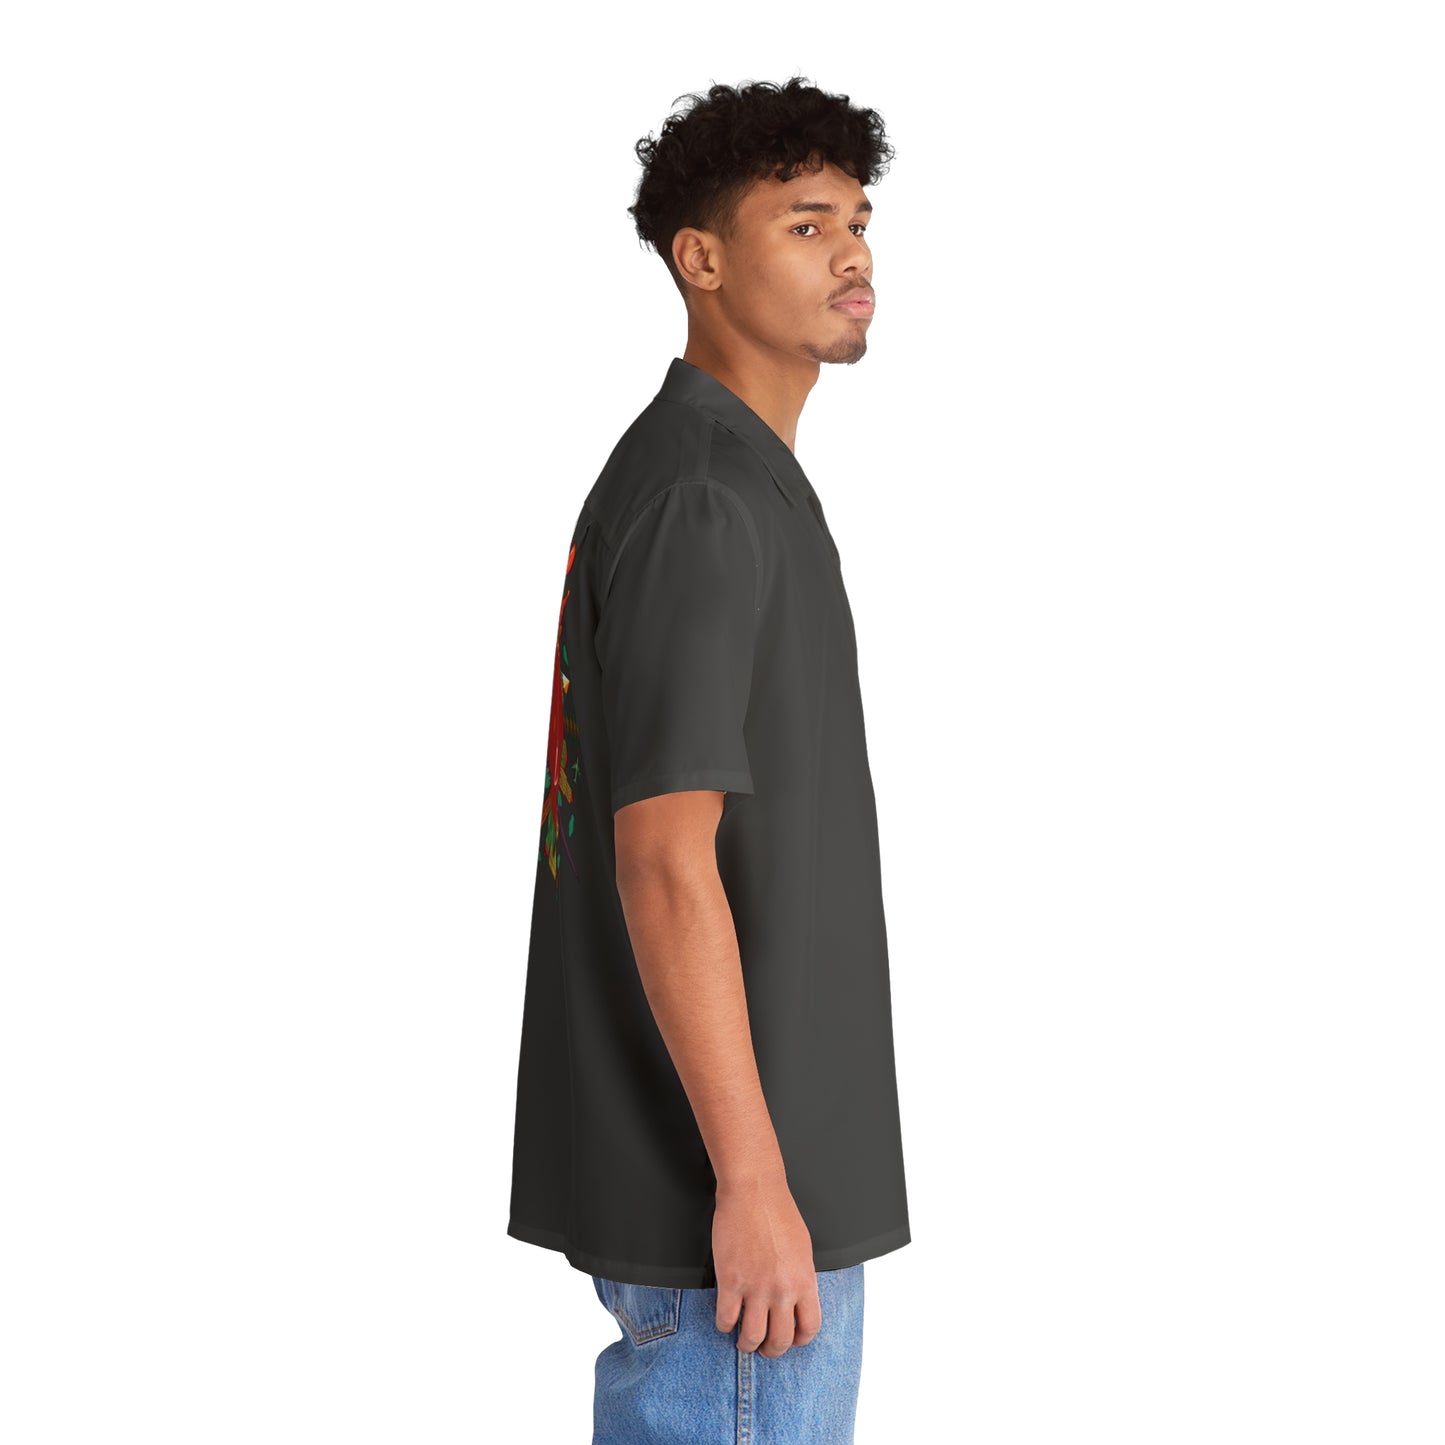 ND Travel - Logo - Black 000000 - Men's Hawaiian Shirt